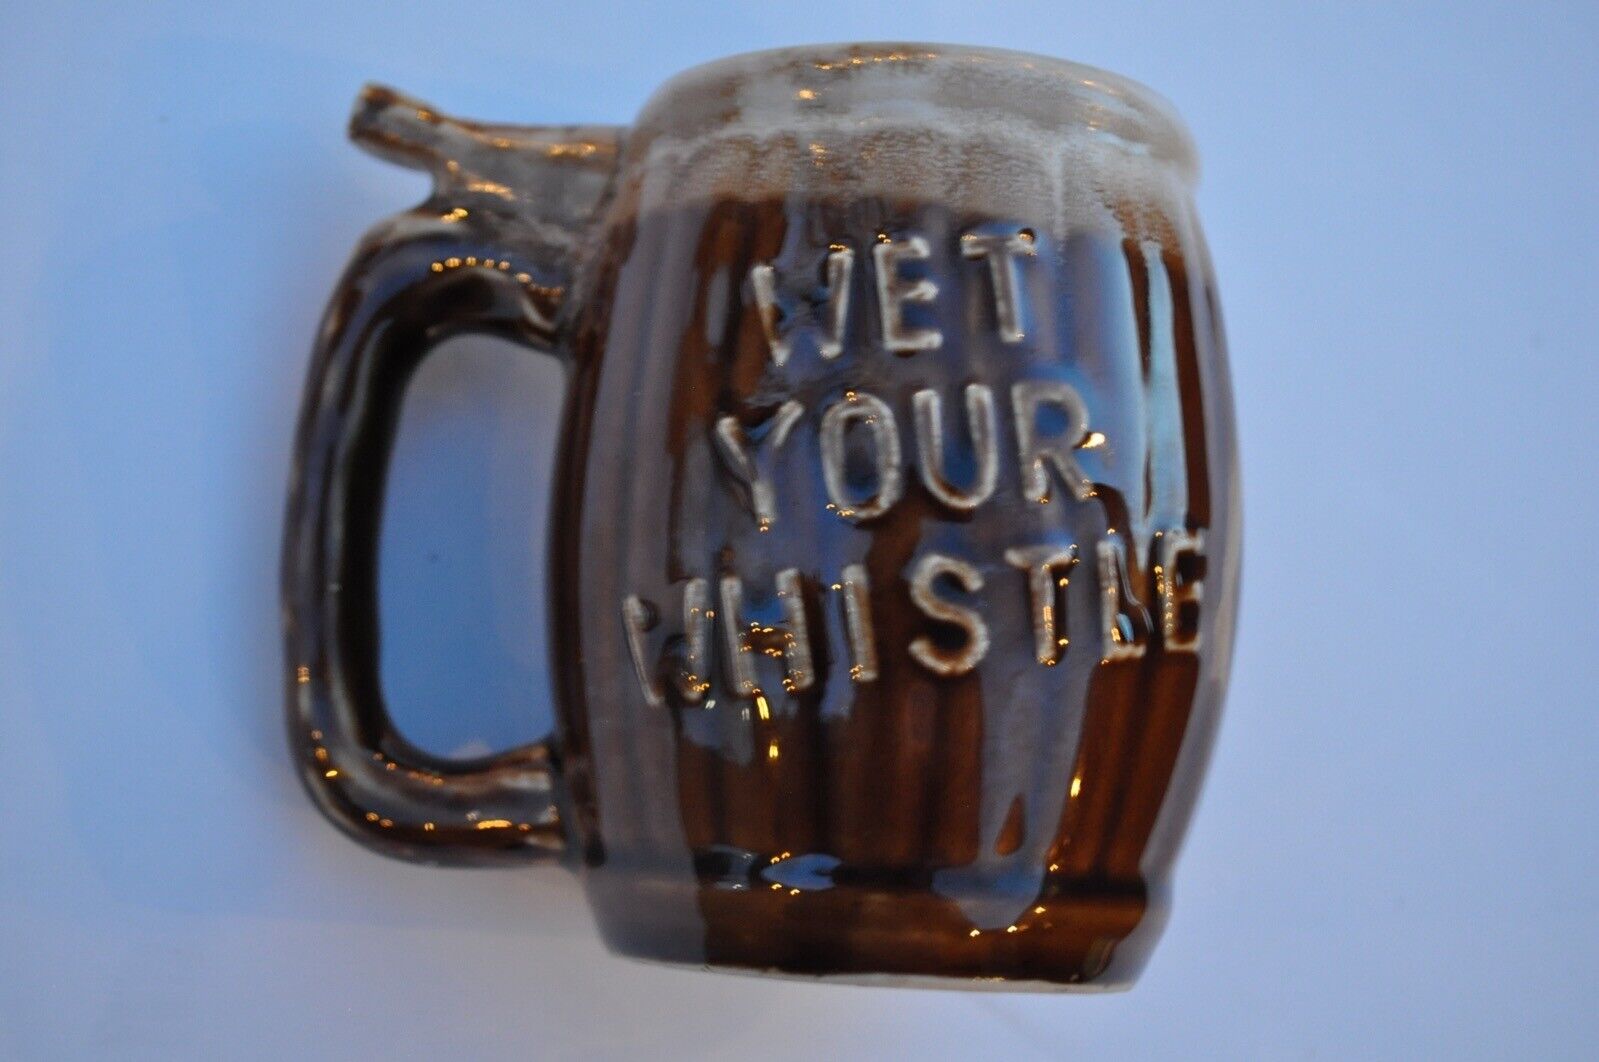 Vintage Beer Mug Wet your Whistle Beer Mug Brown Ceramic